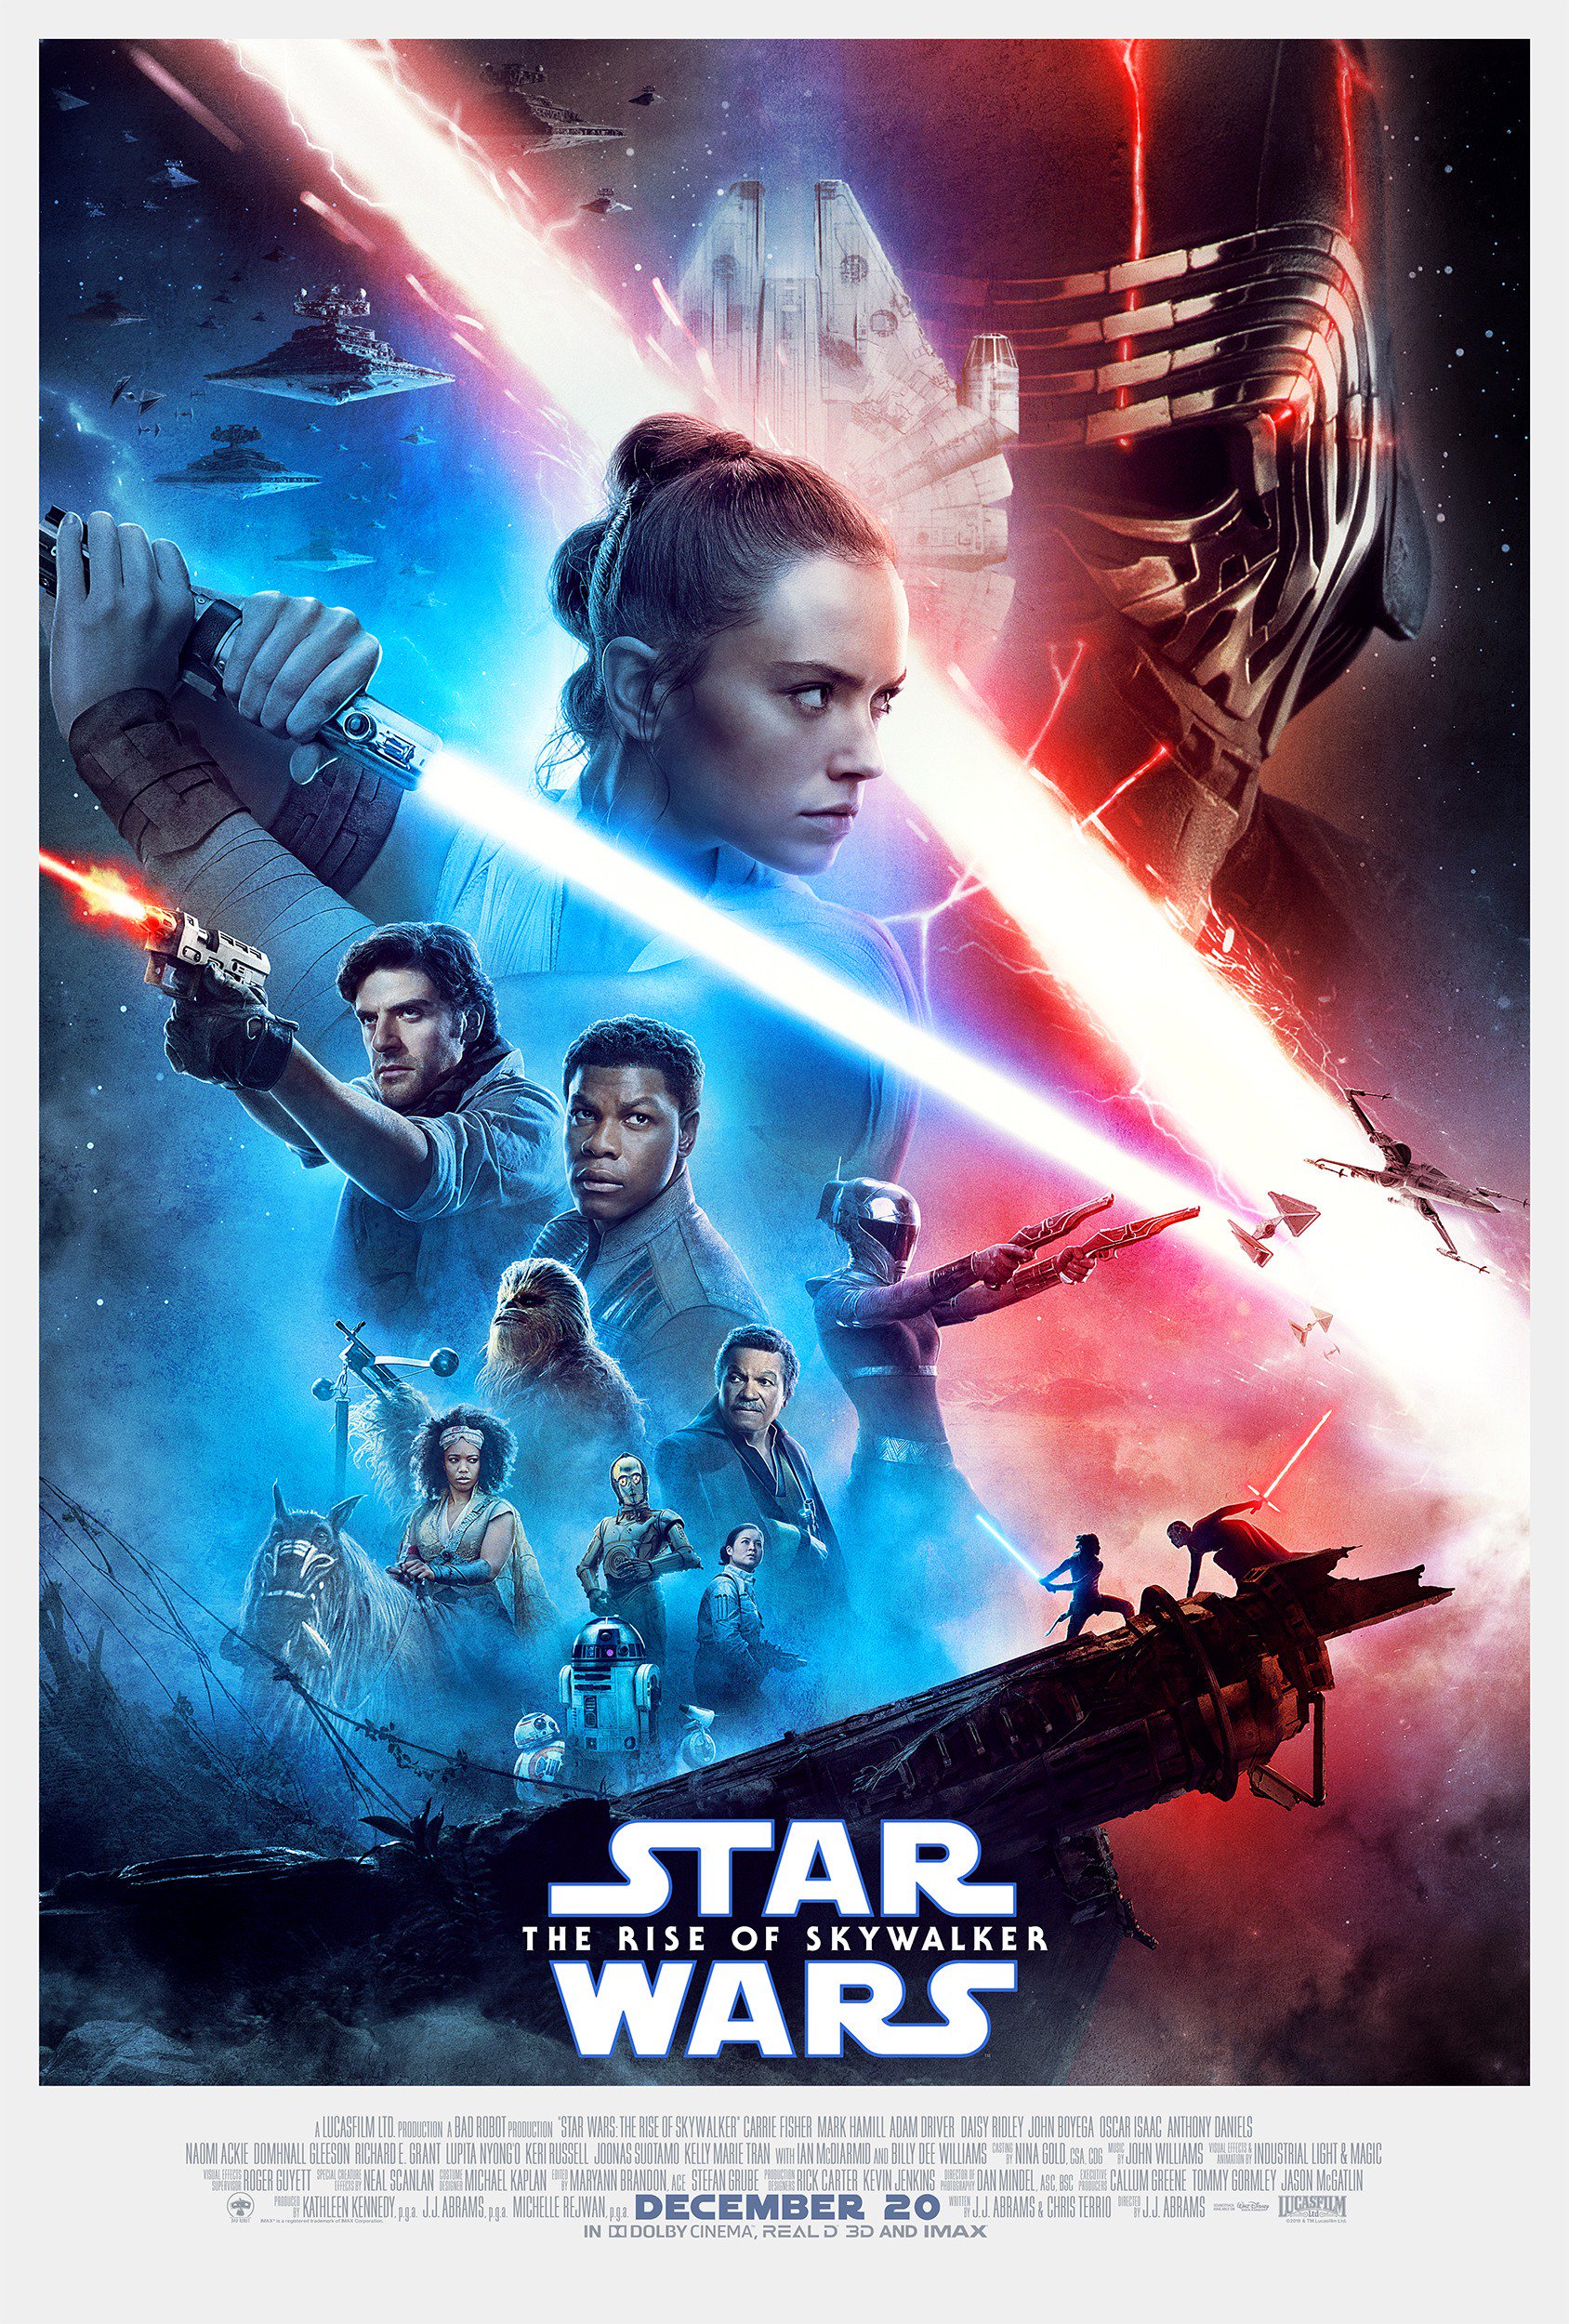 Star Wars Episode IX The Rise of Skywalker Poster